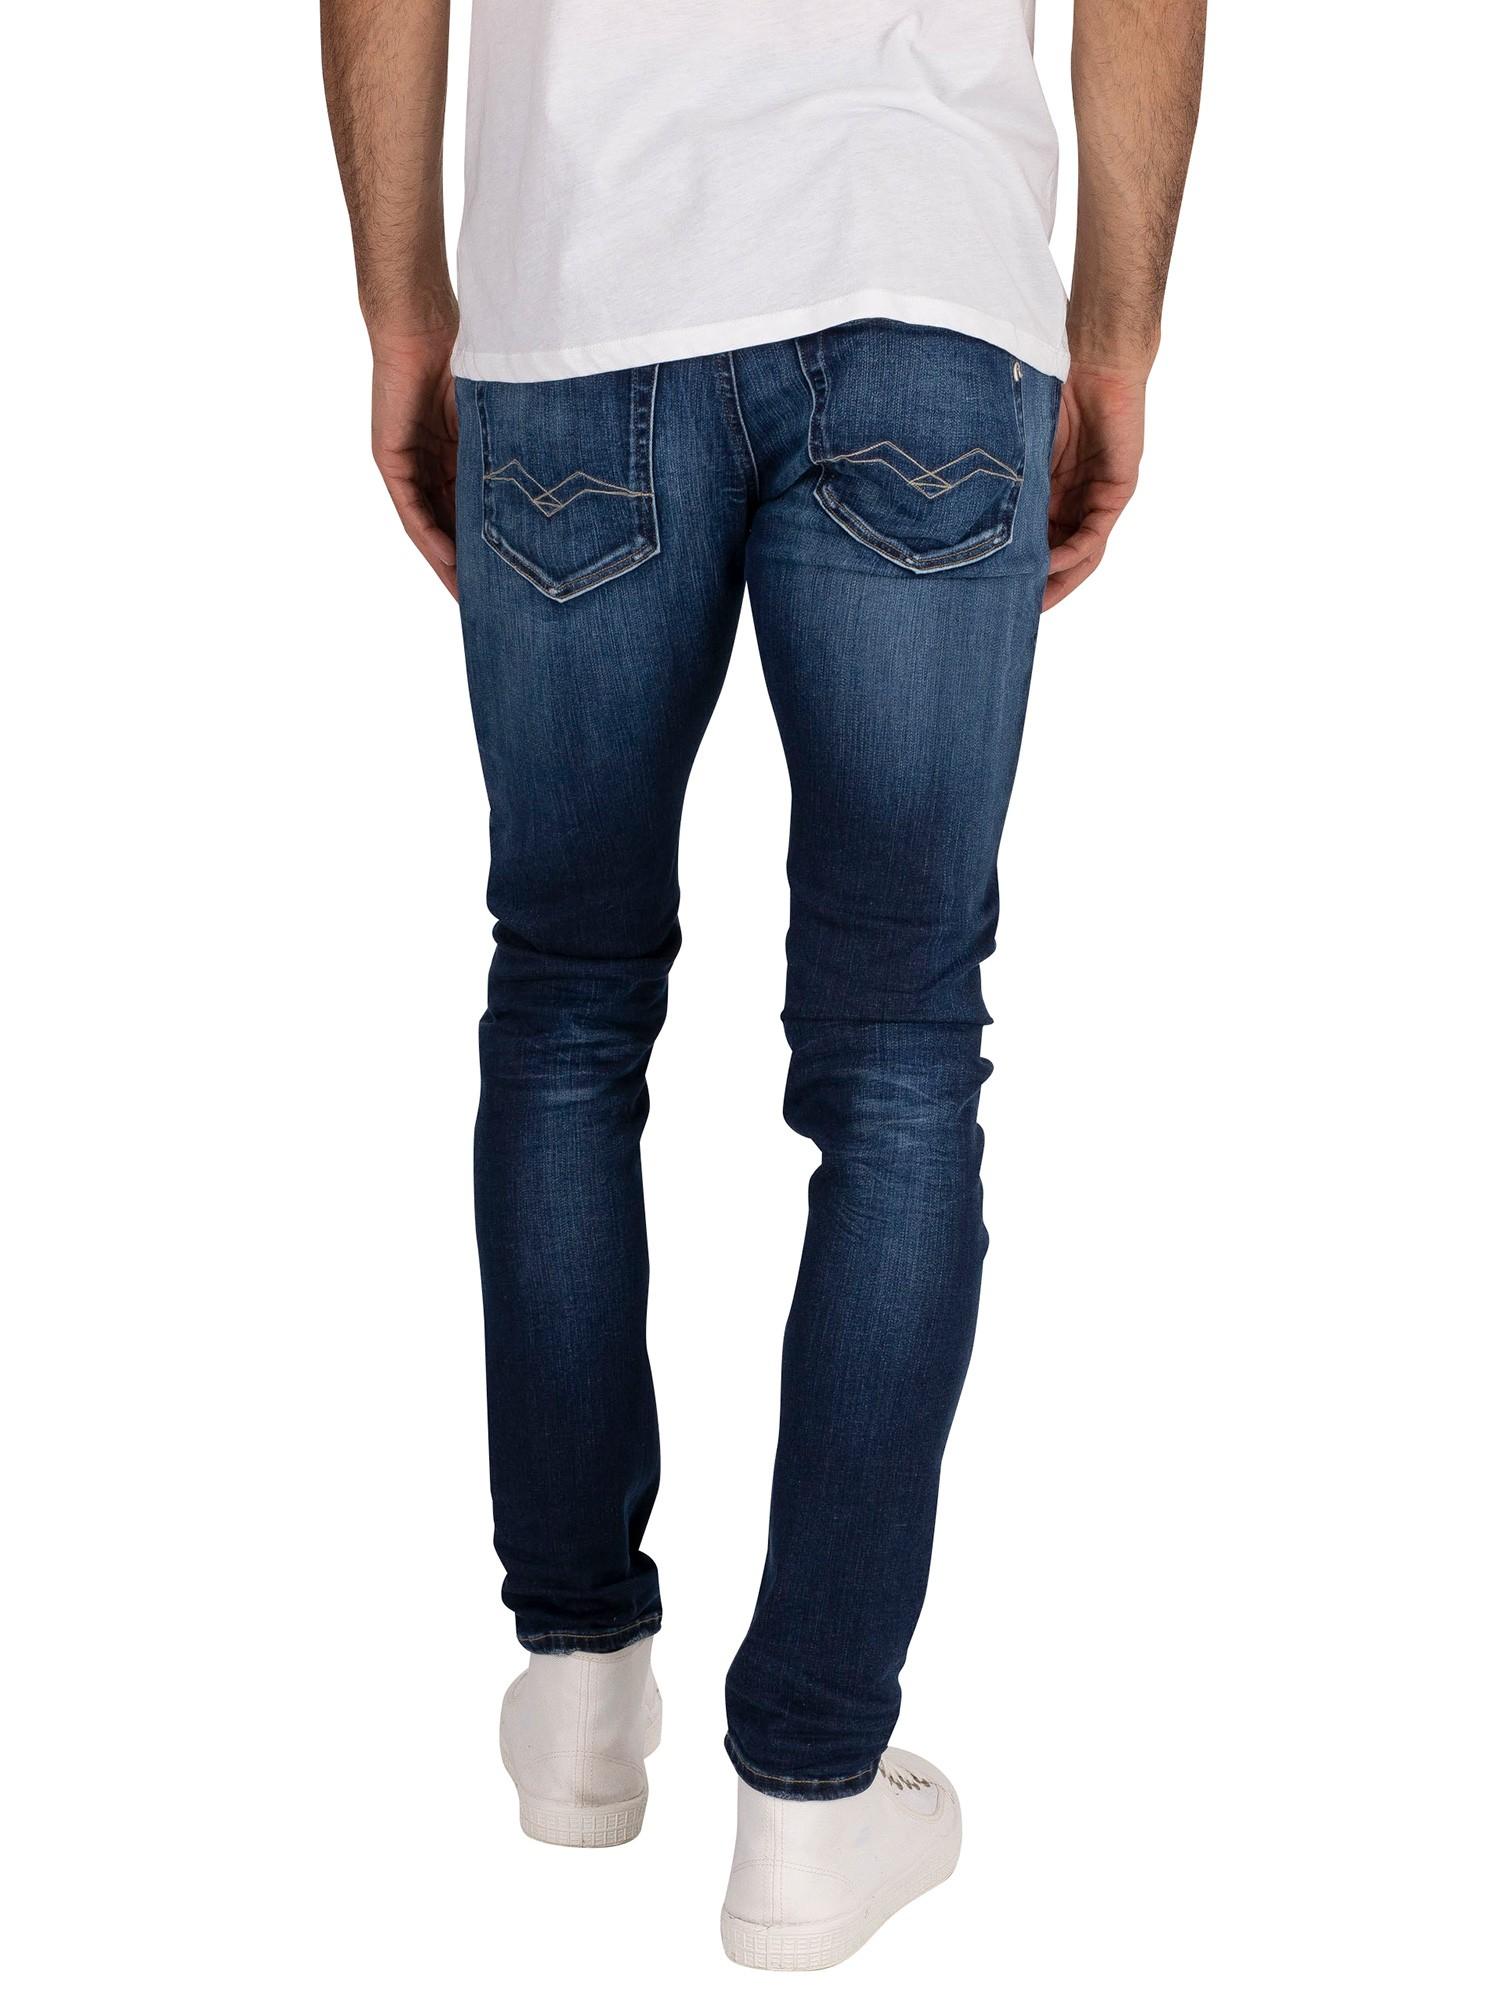 Nationaal Weglaten Ieder Replay Denim Jondrill Hyperflex Bio Jeans in Blue for Men - Lyst